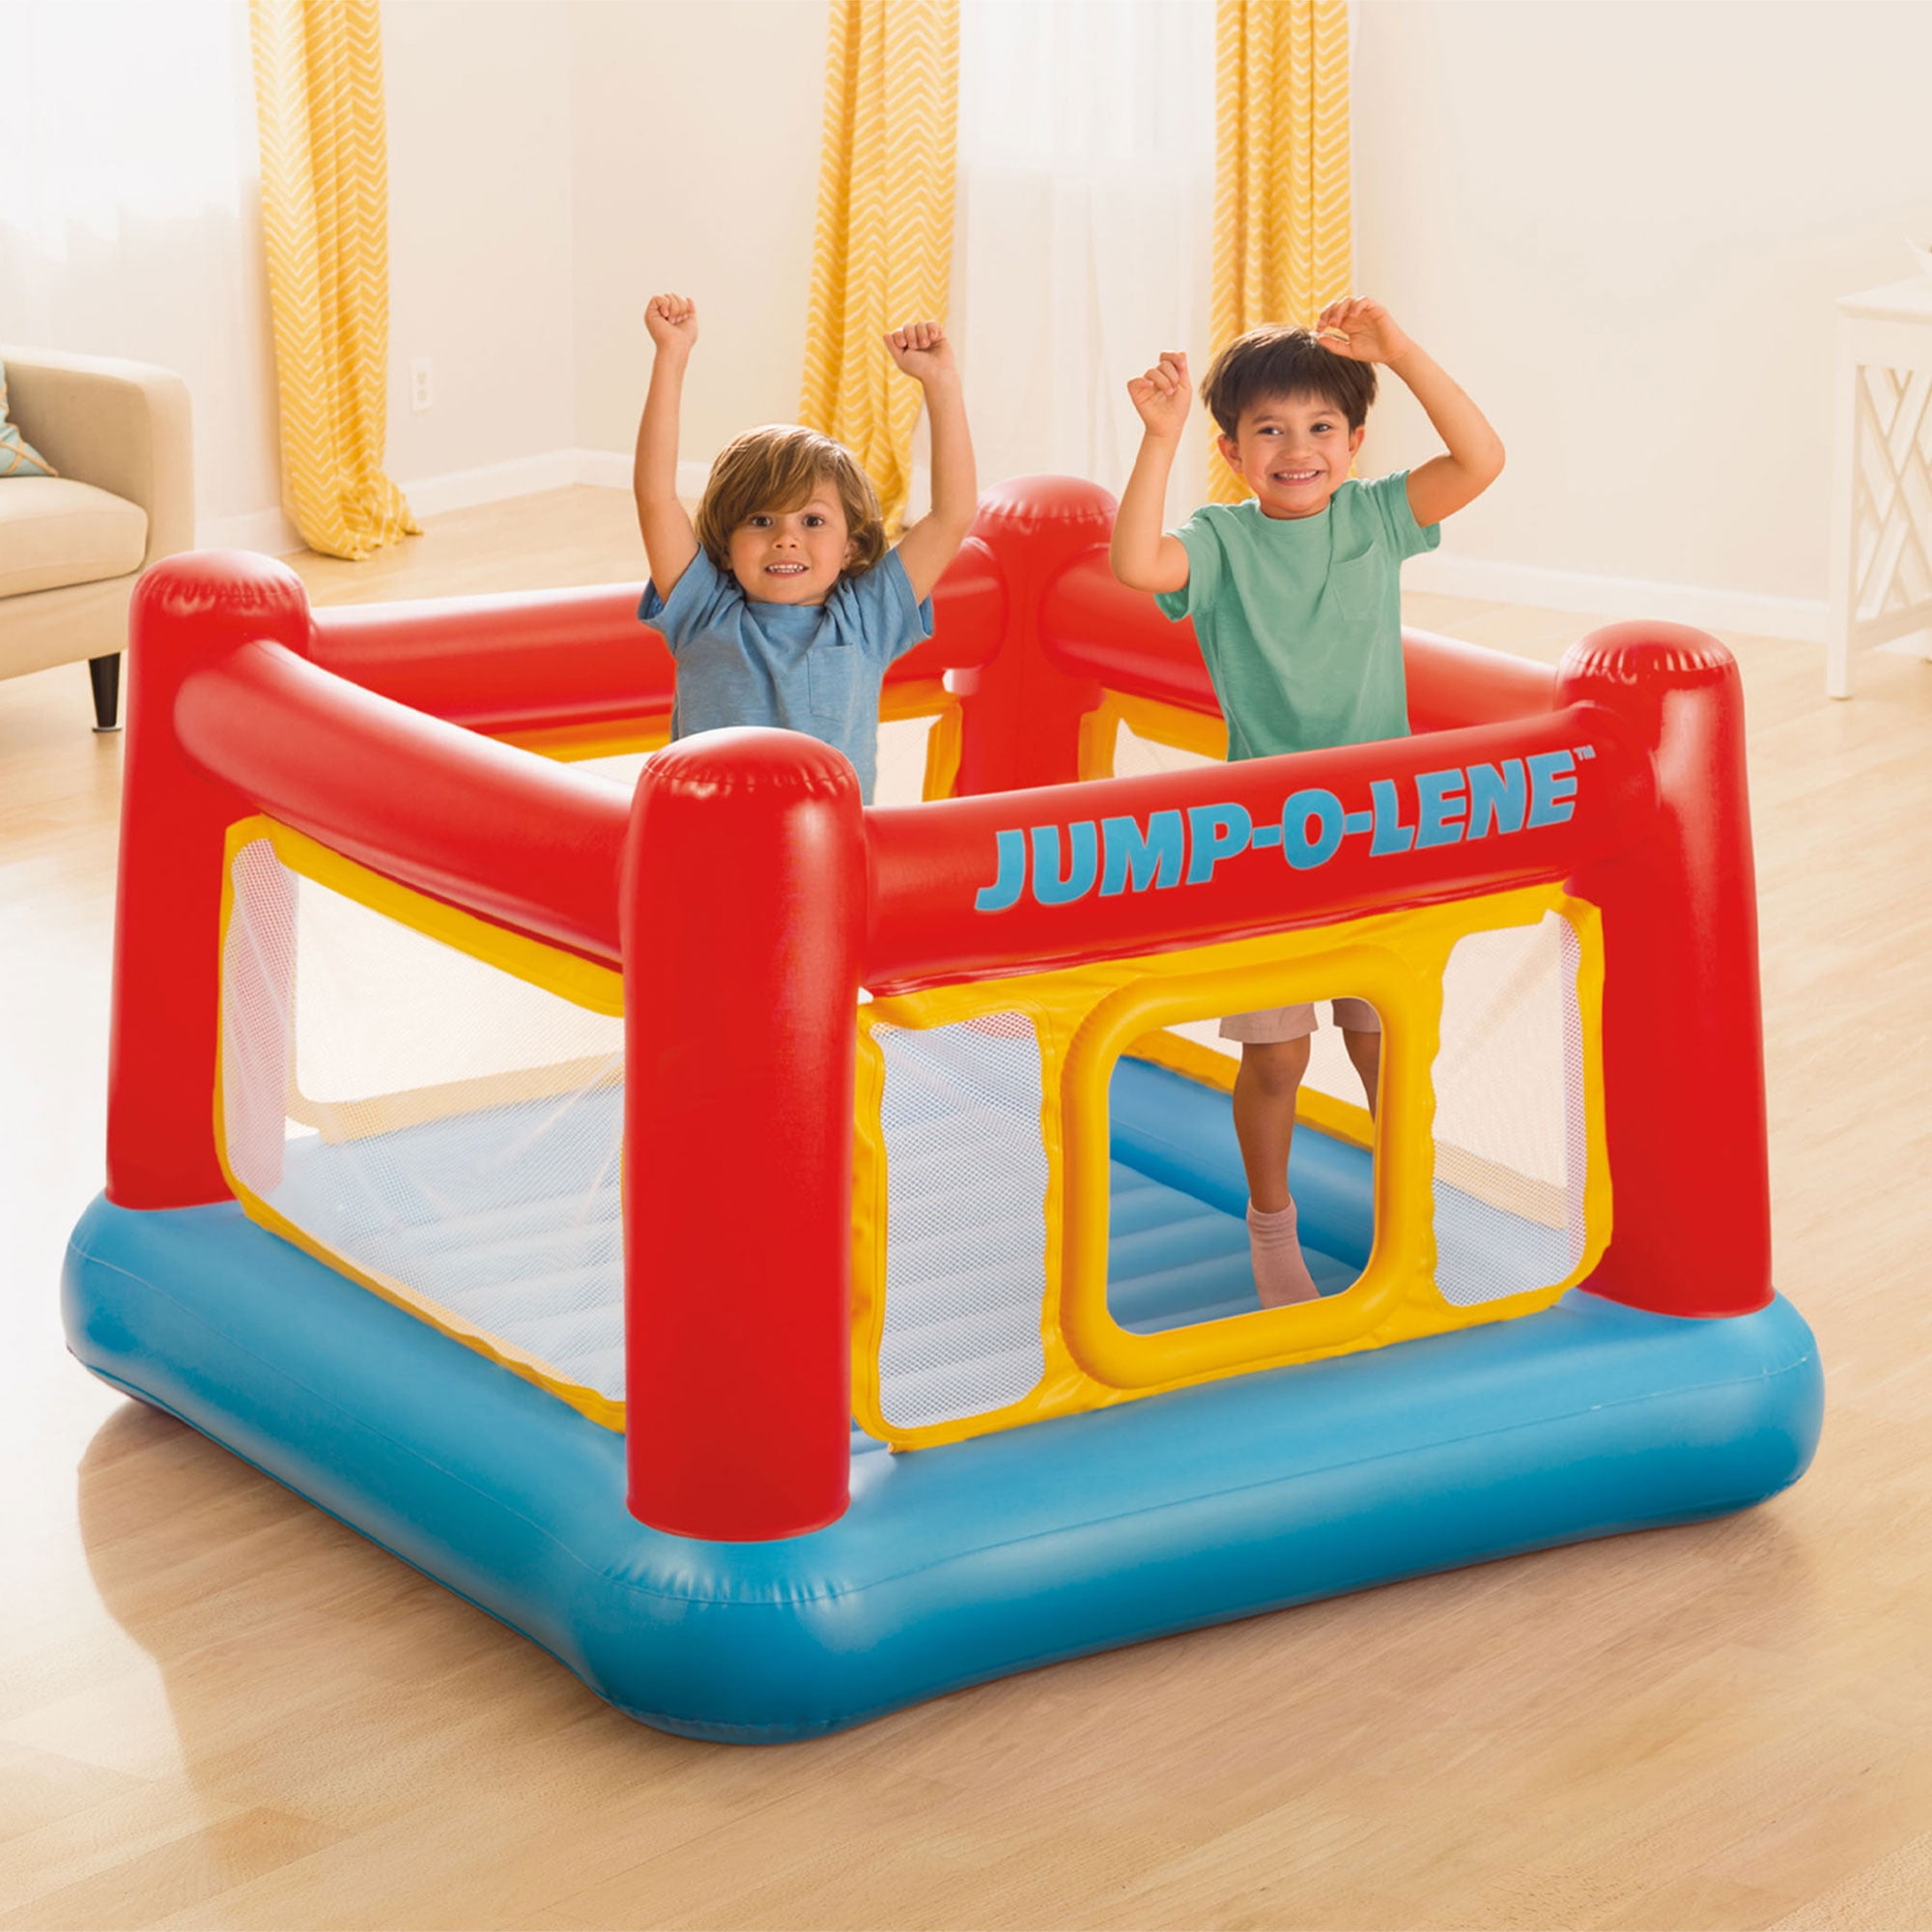 einde onderbreken betalen Intex Inflatable Jump-O-Lene Trampoline Bounce House with Reinforced Net -  Walmart.com